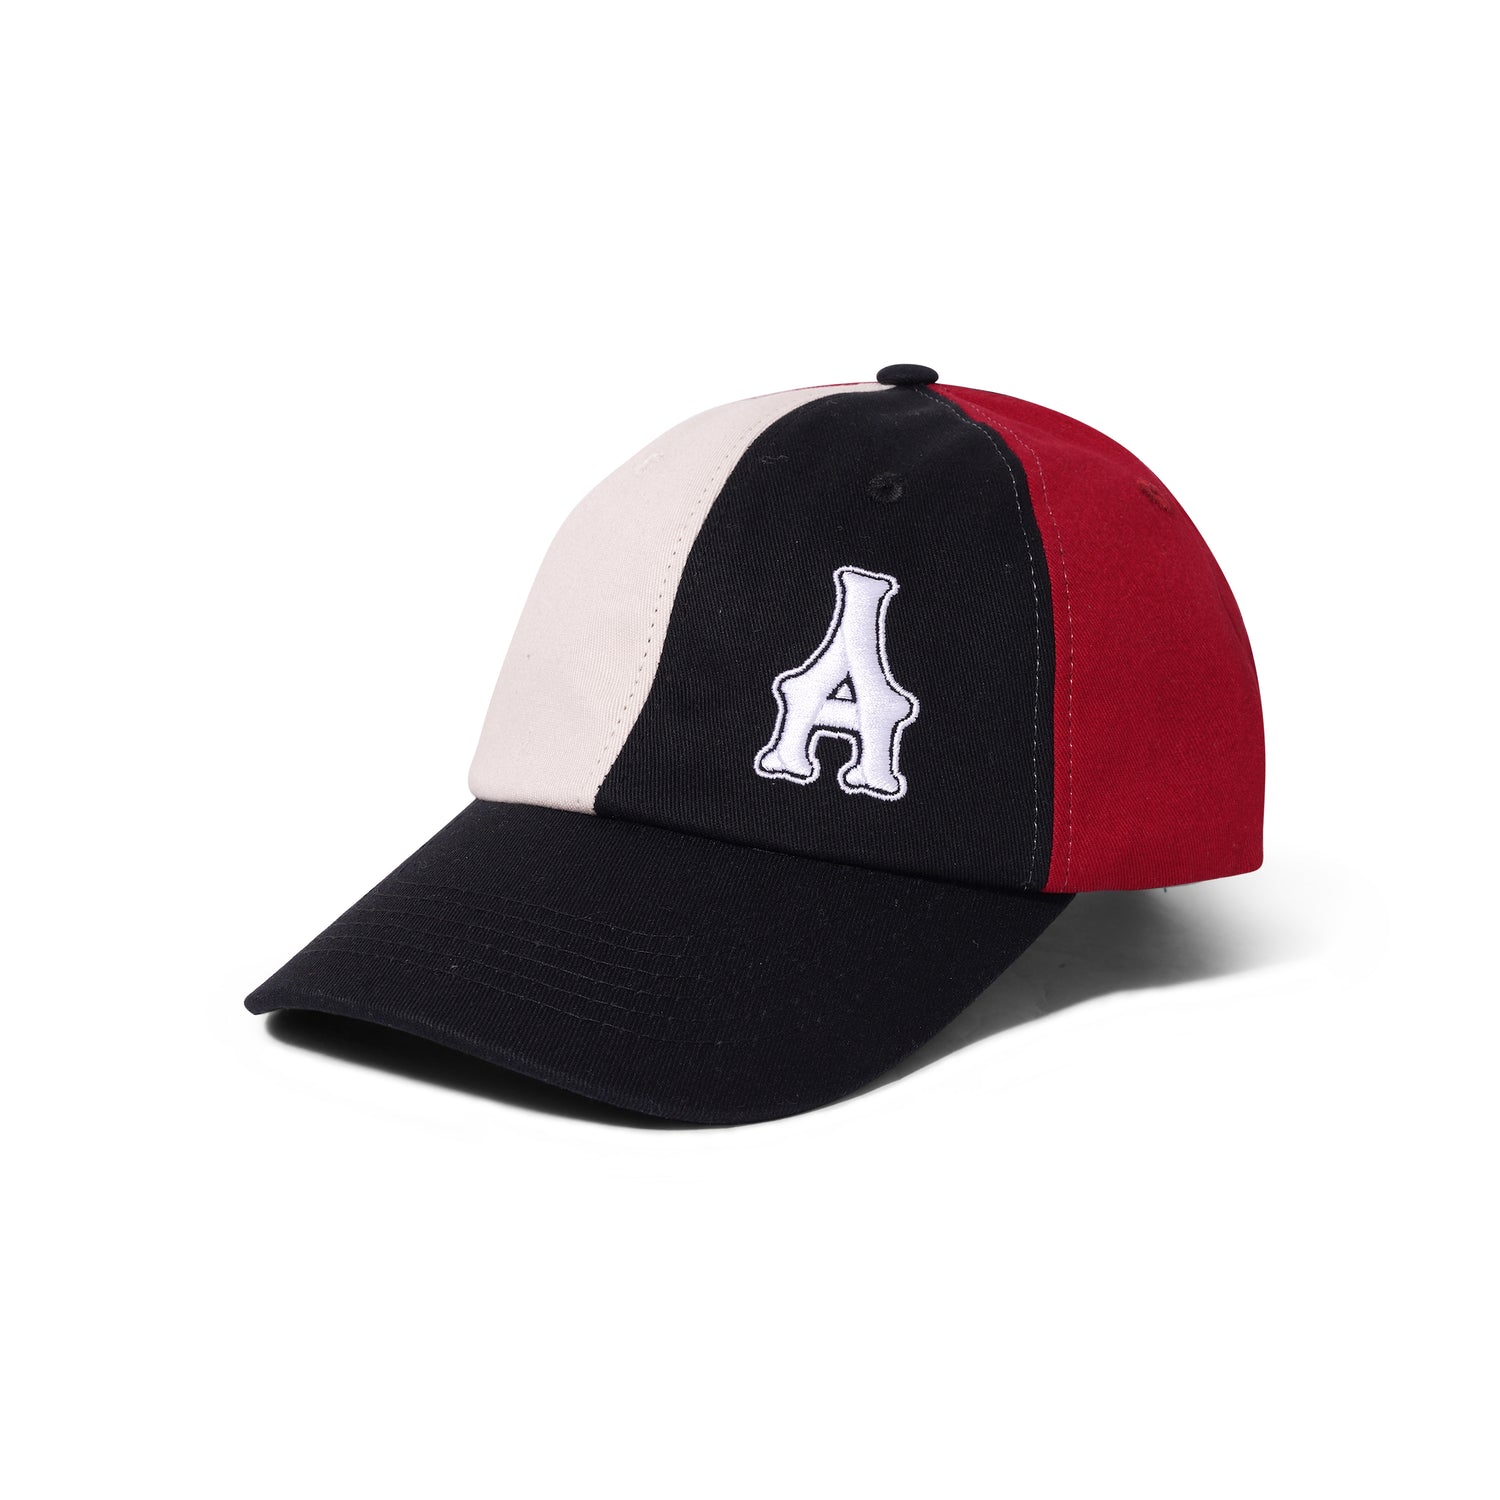 A Hat, Cream / Red / Black / White